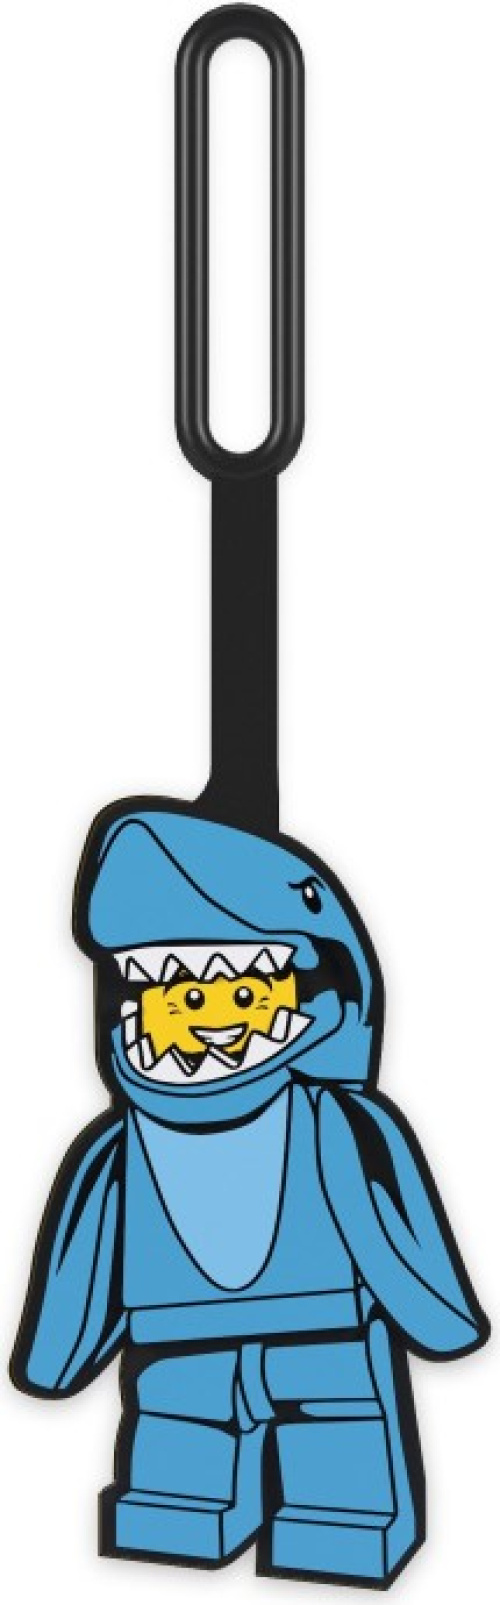 5007229-1 Shark Suit Guy Bag Tag